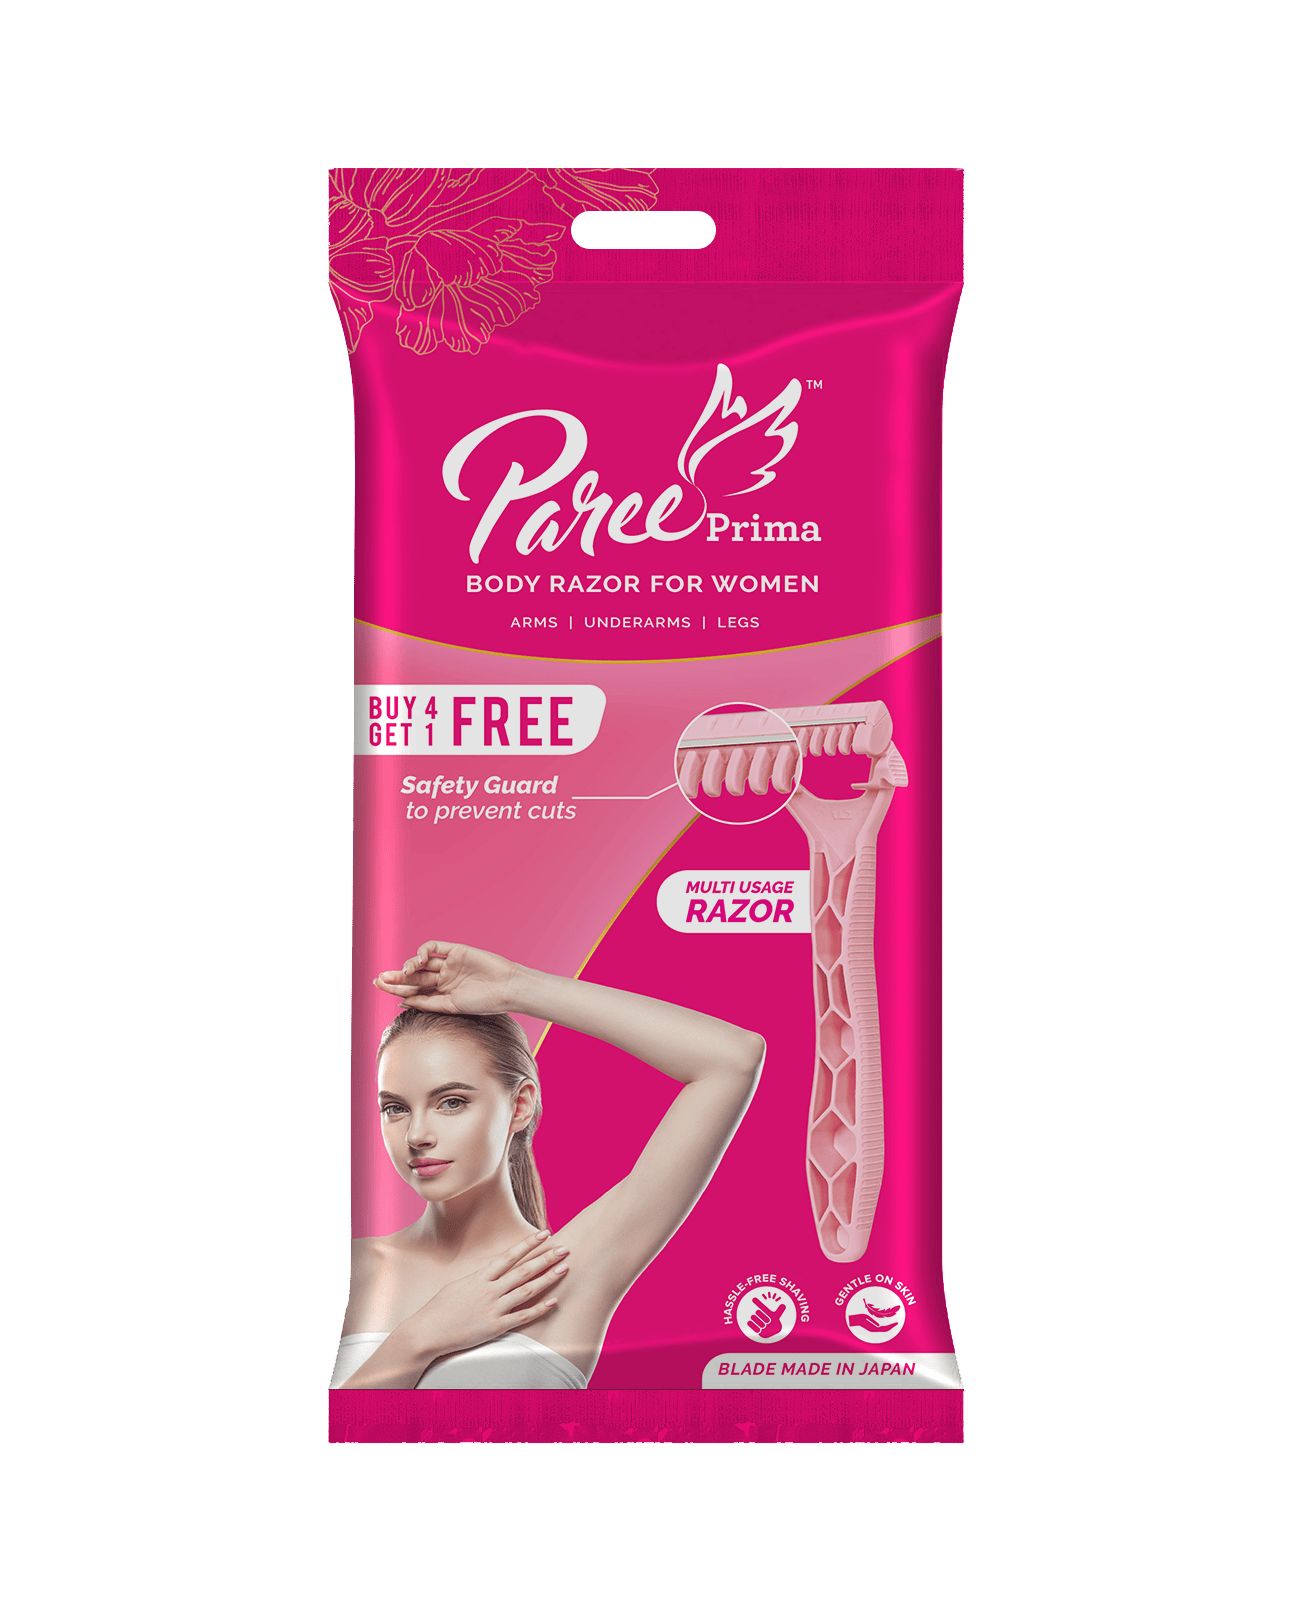 Paree | Paree Prima Premium Full Body Razors for Women - Pack of 5